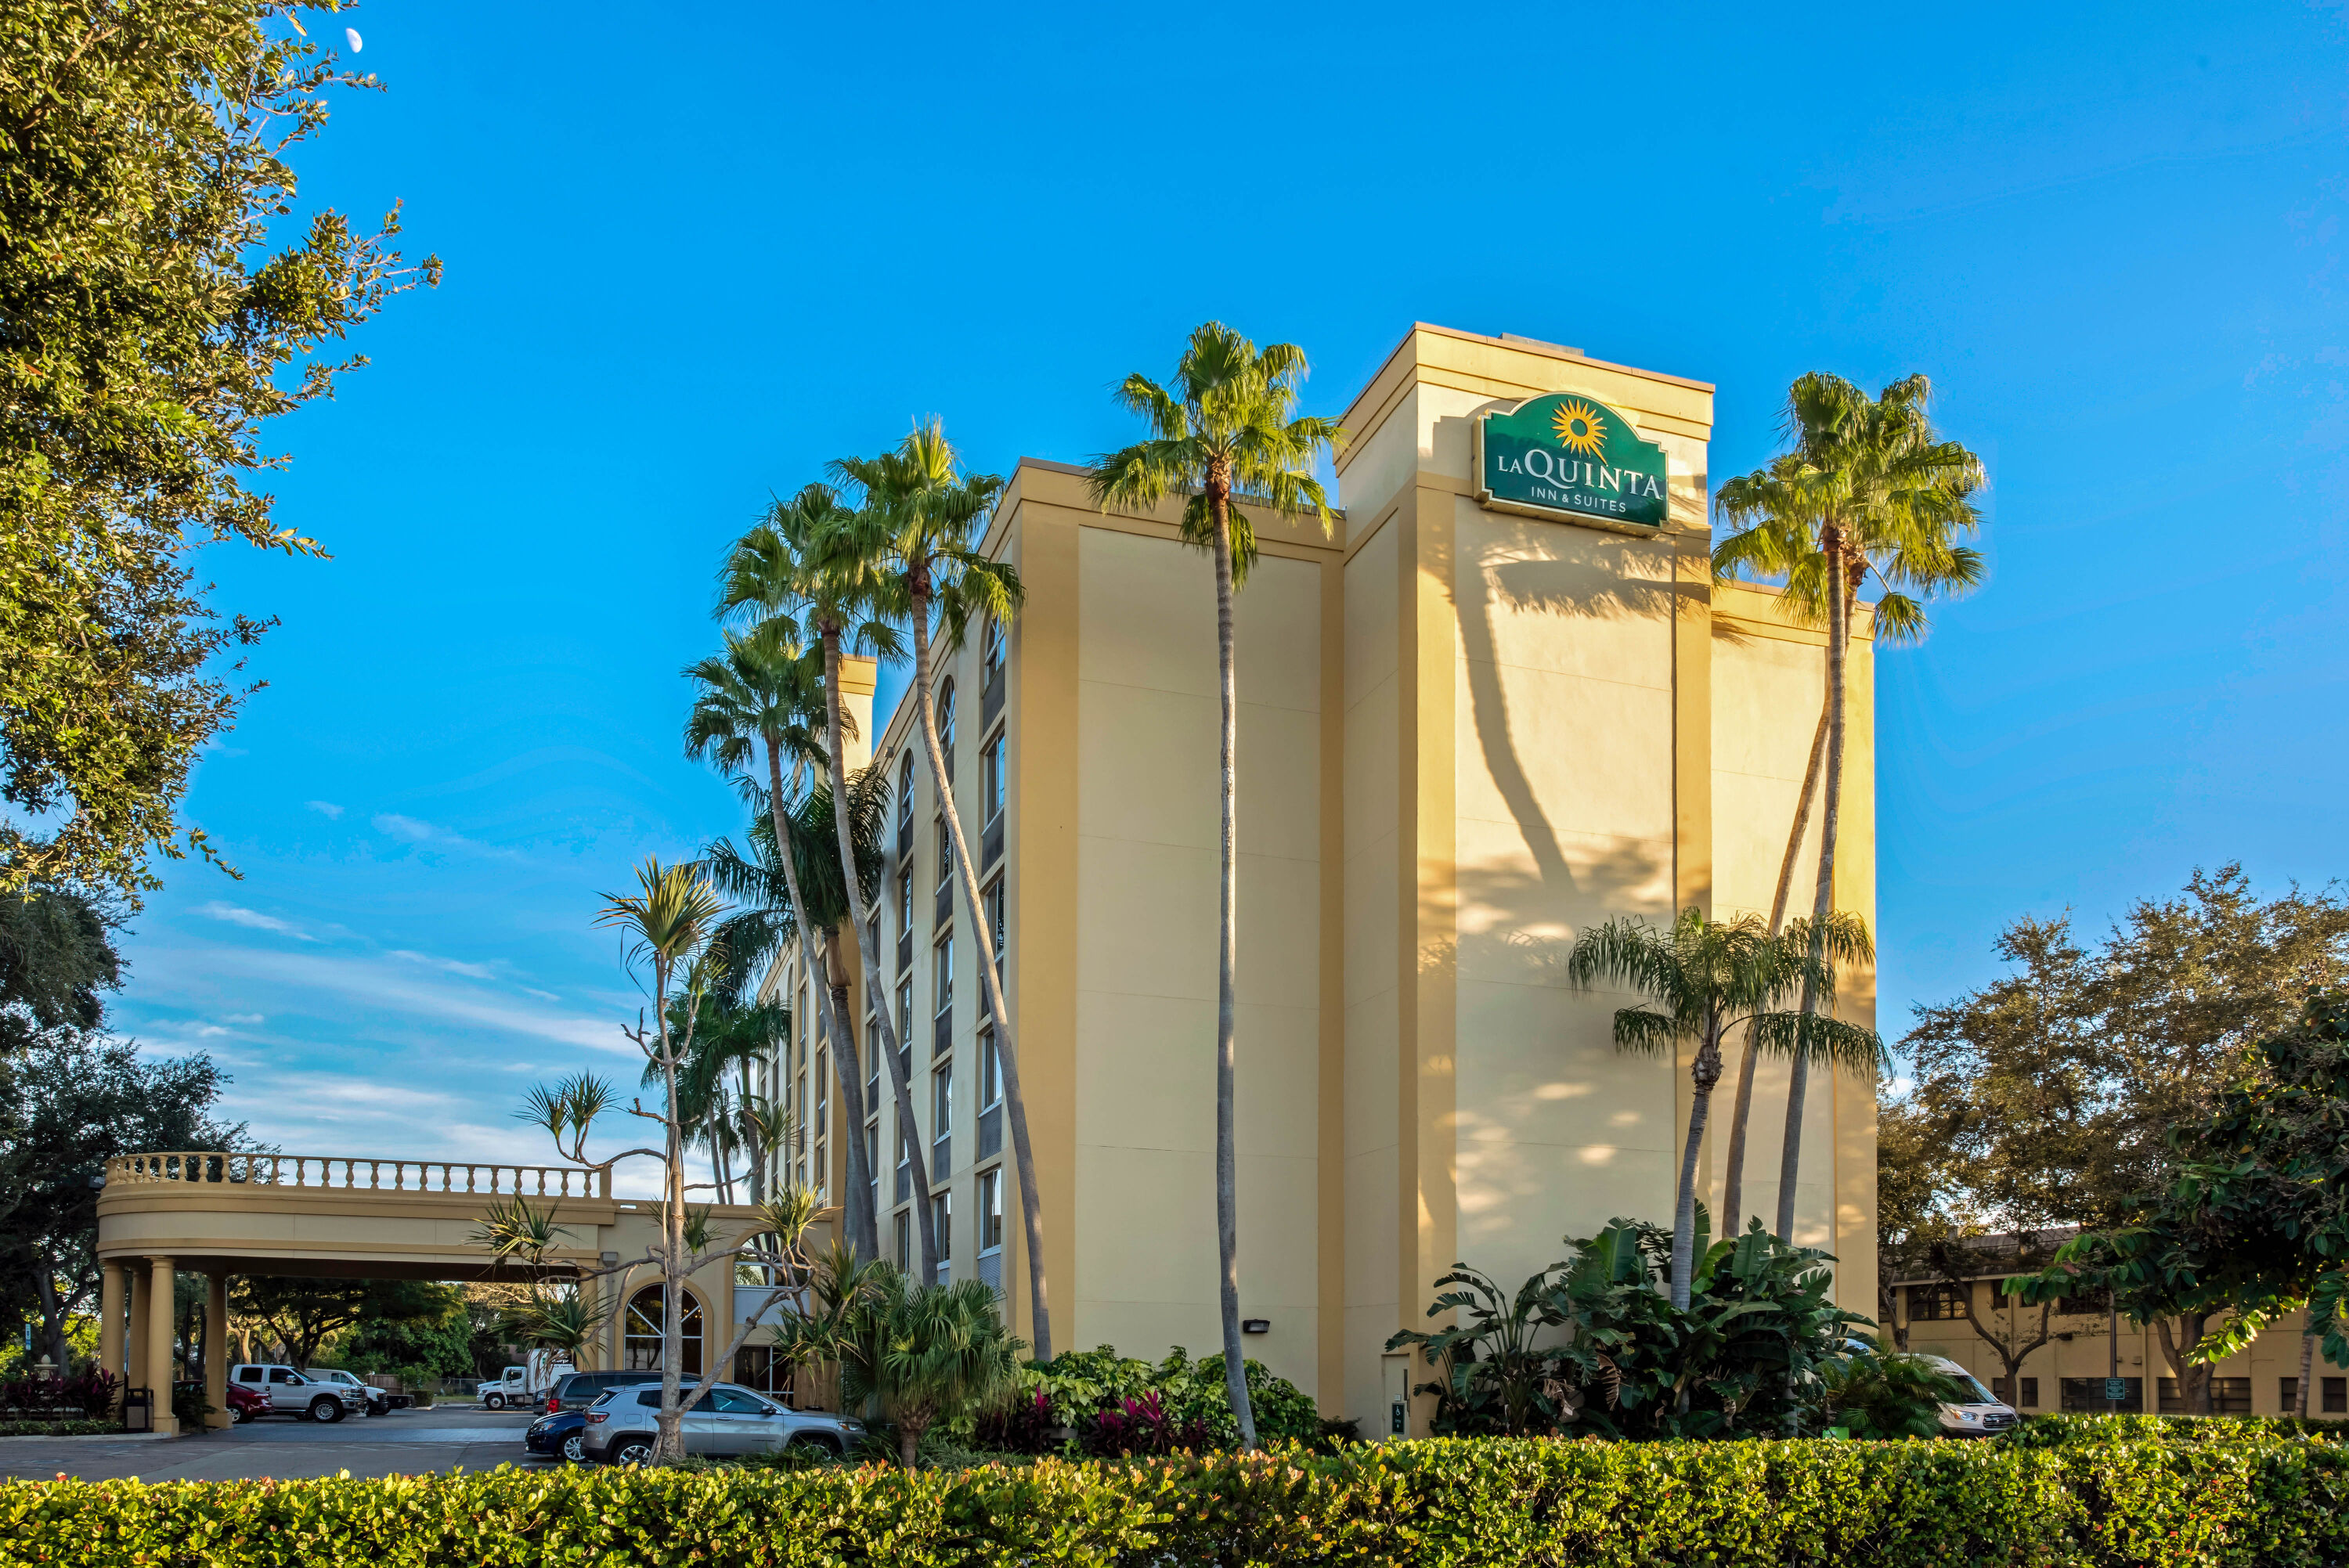 Casinos in west palm beach florida